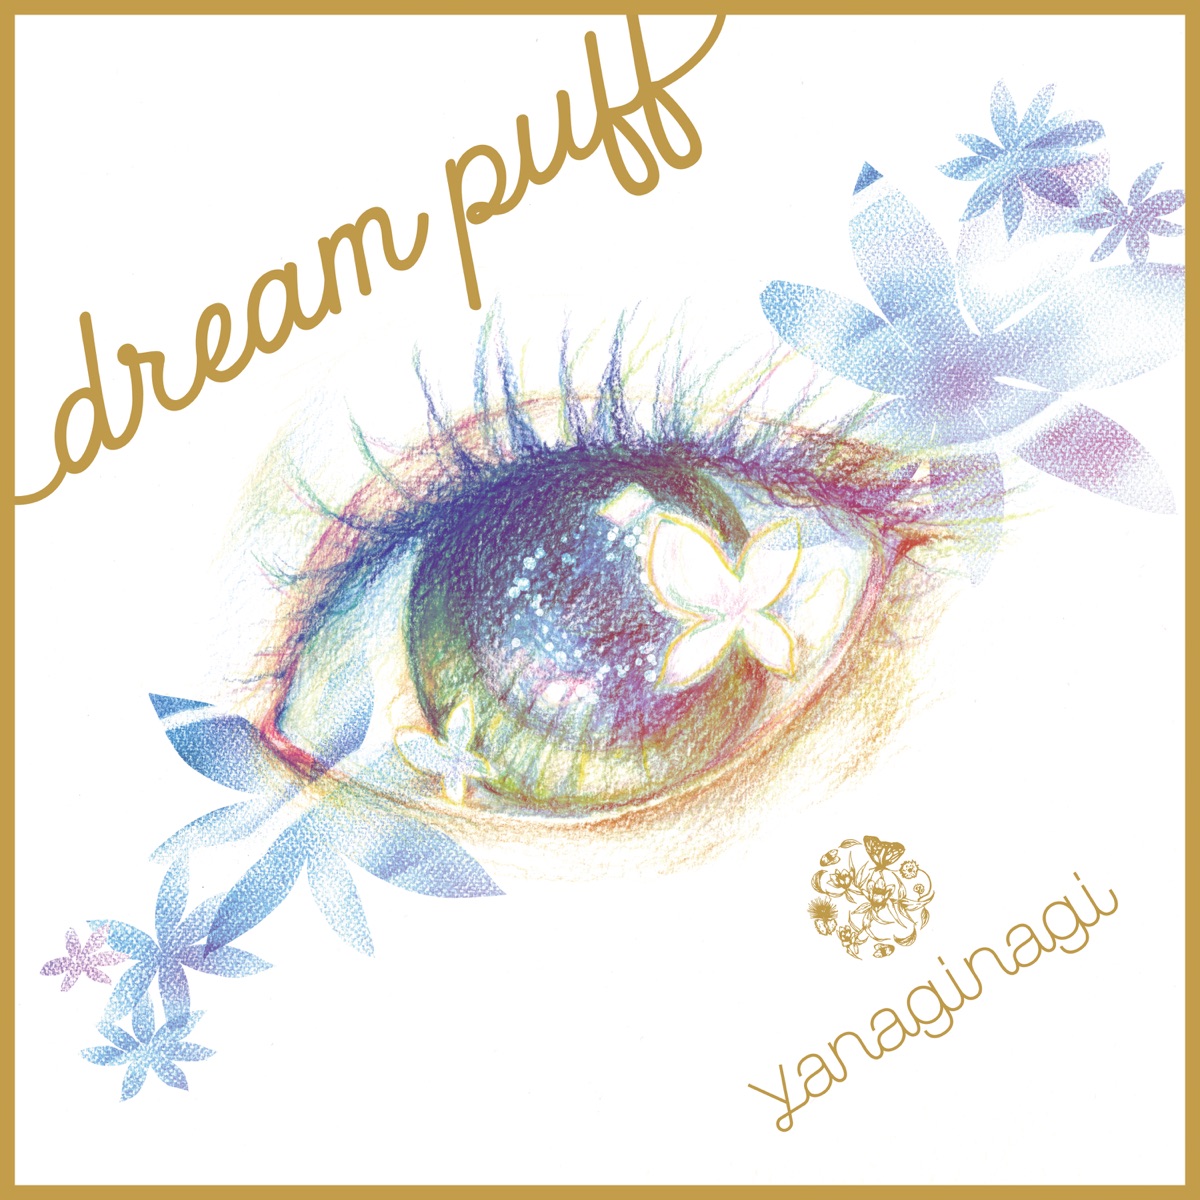 Cover art for『yanaginagi - dream puff』from the release『dream puff